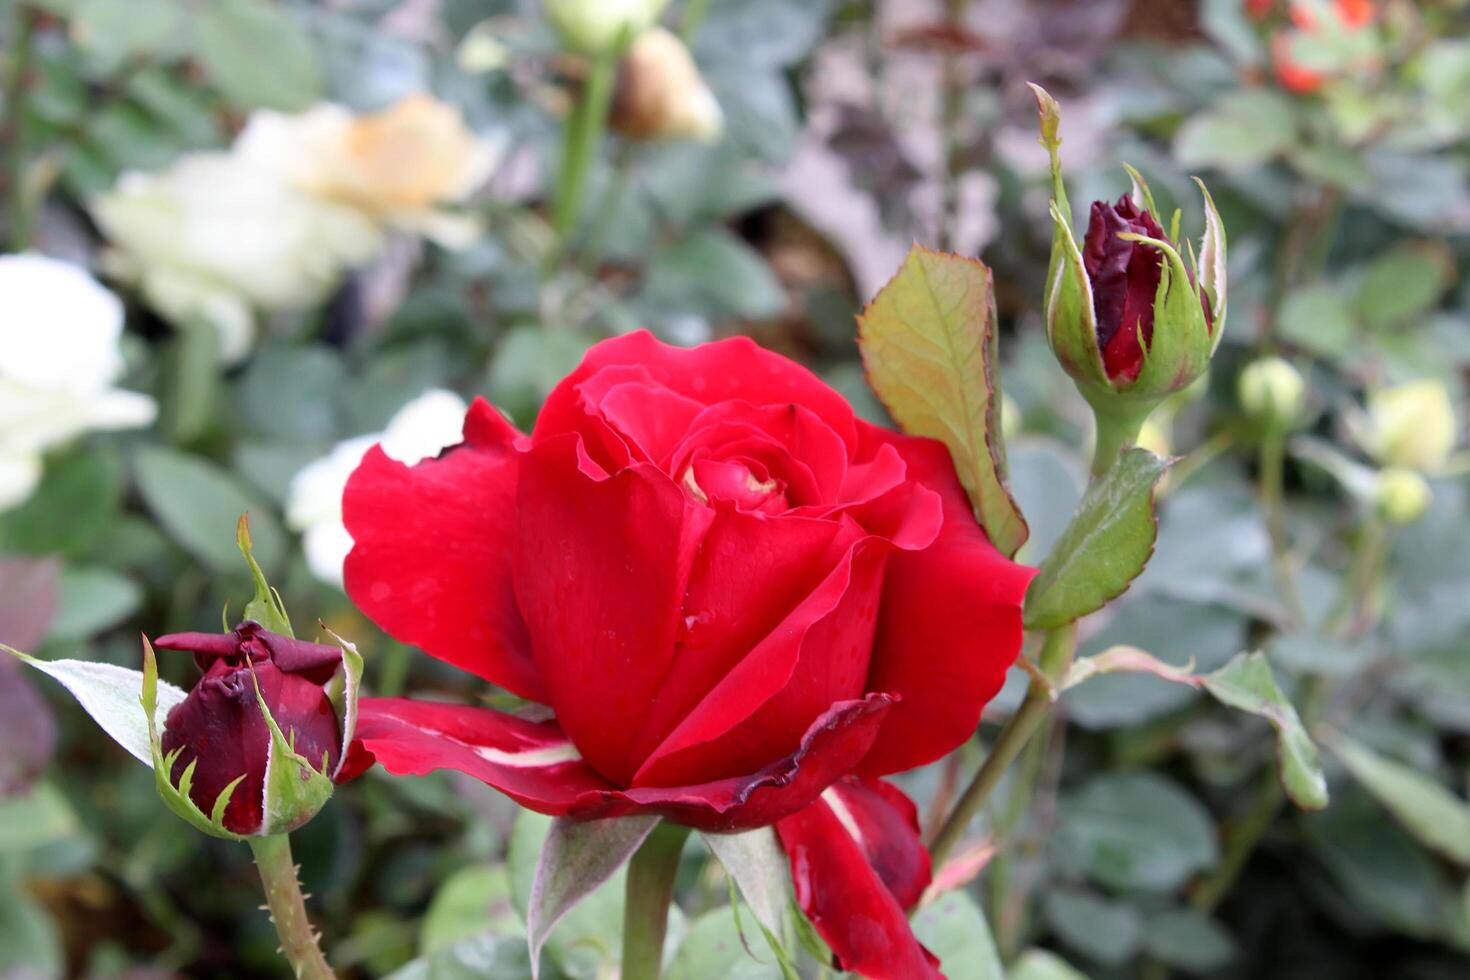 red pattern rose flower in the garden photo